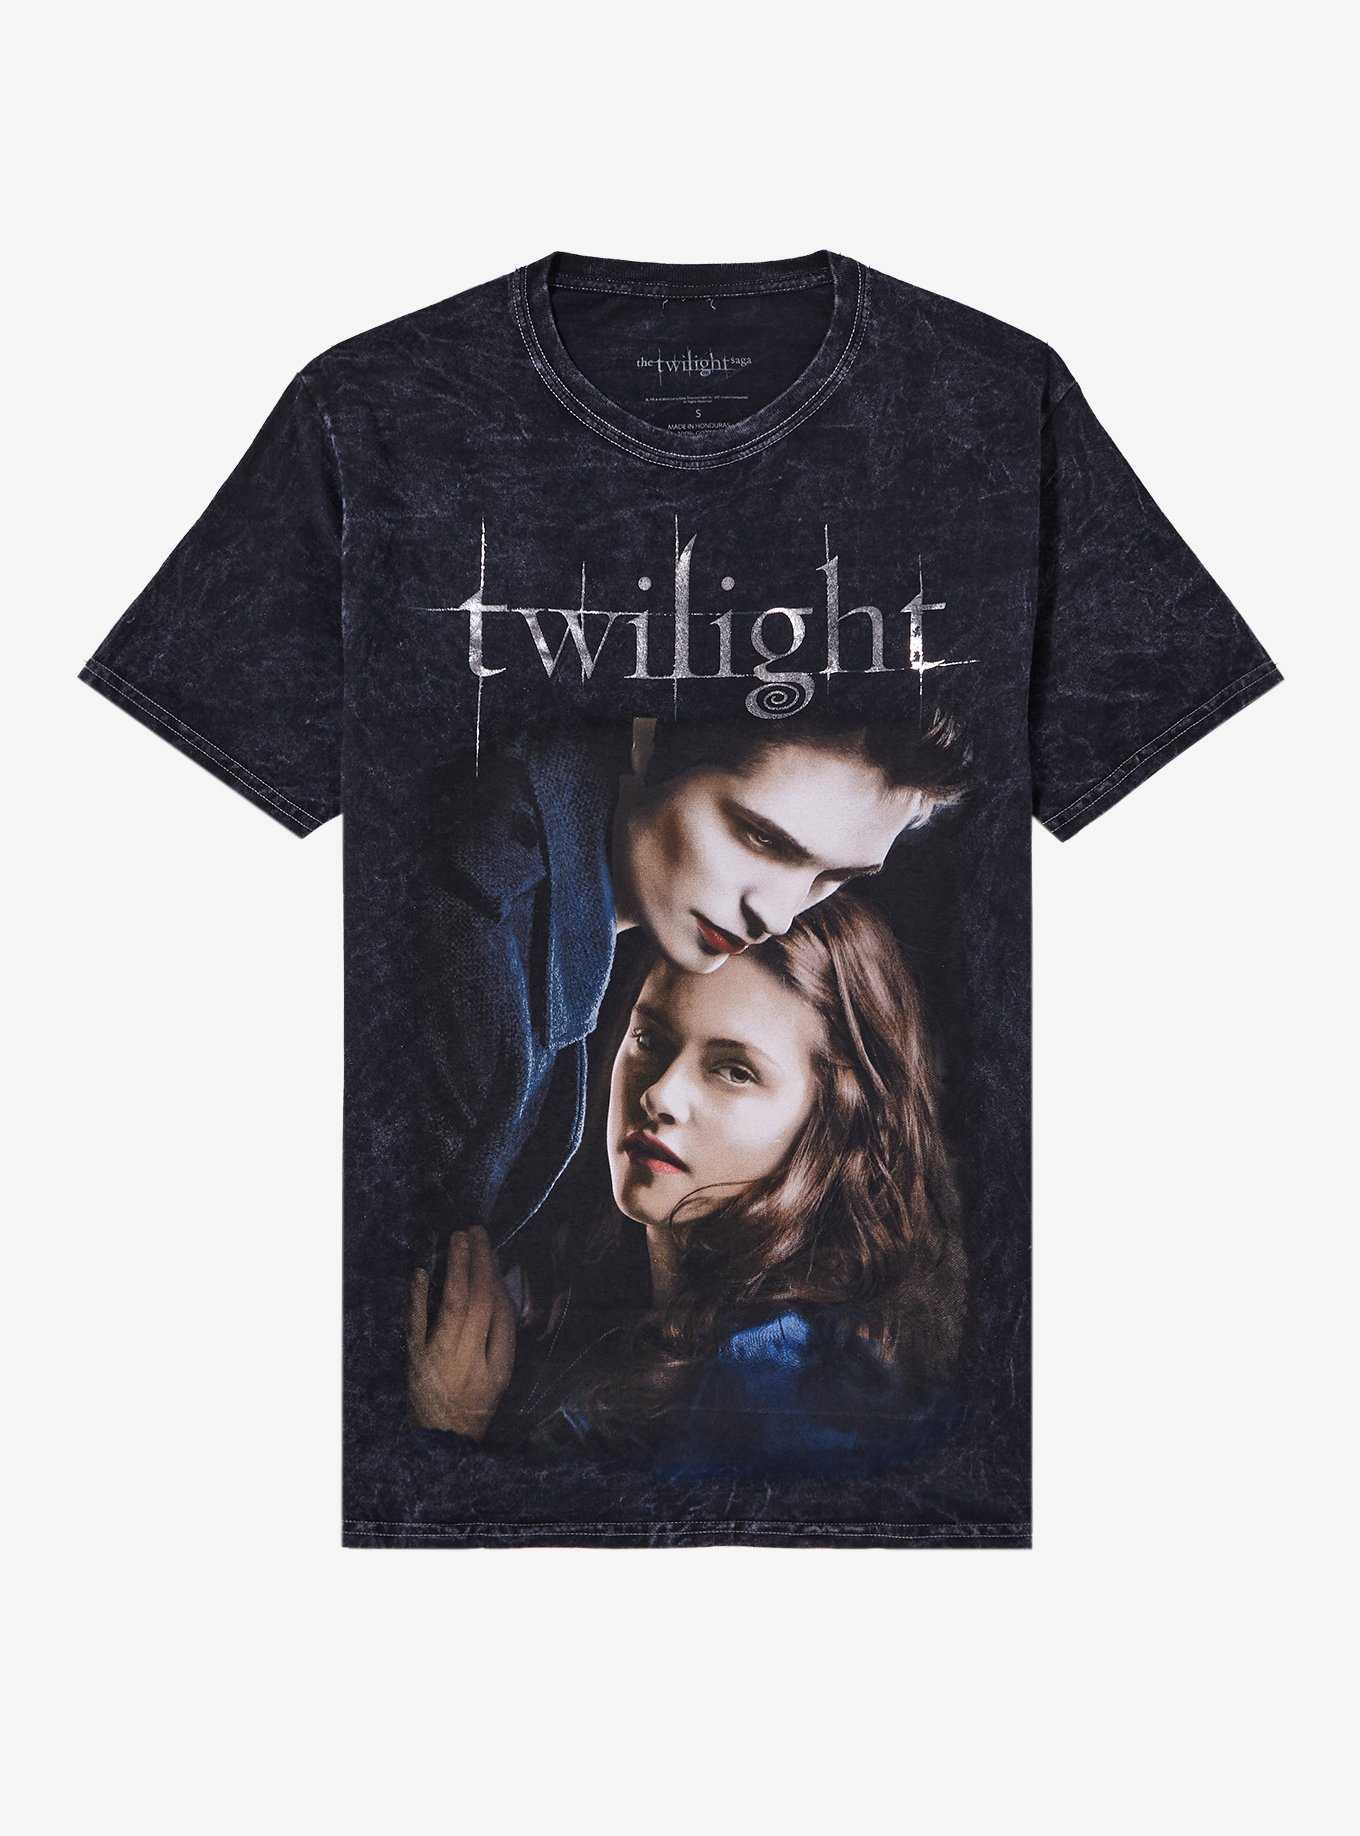 I'd Rather Be Watching Twilight Shirt, Twilight Shirt, Twilight